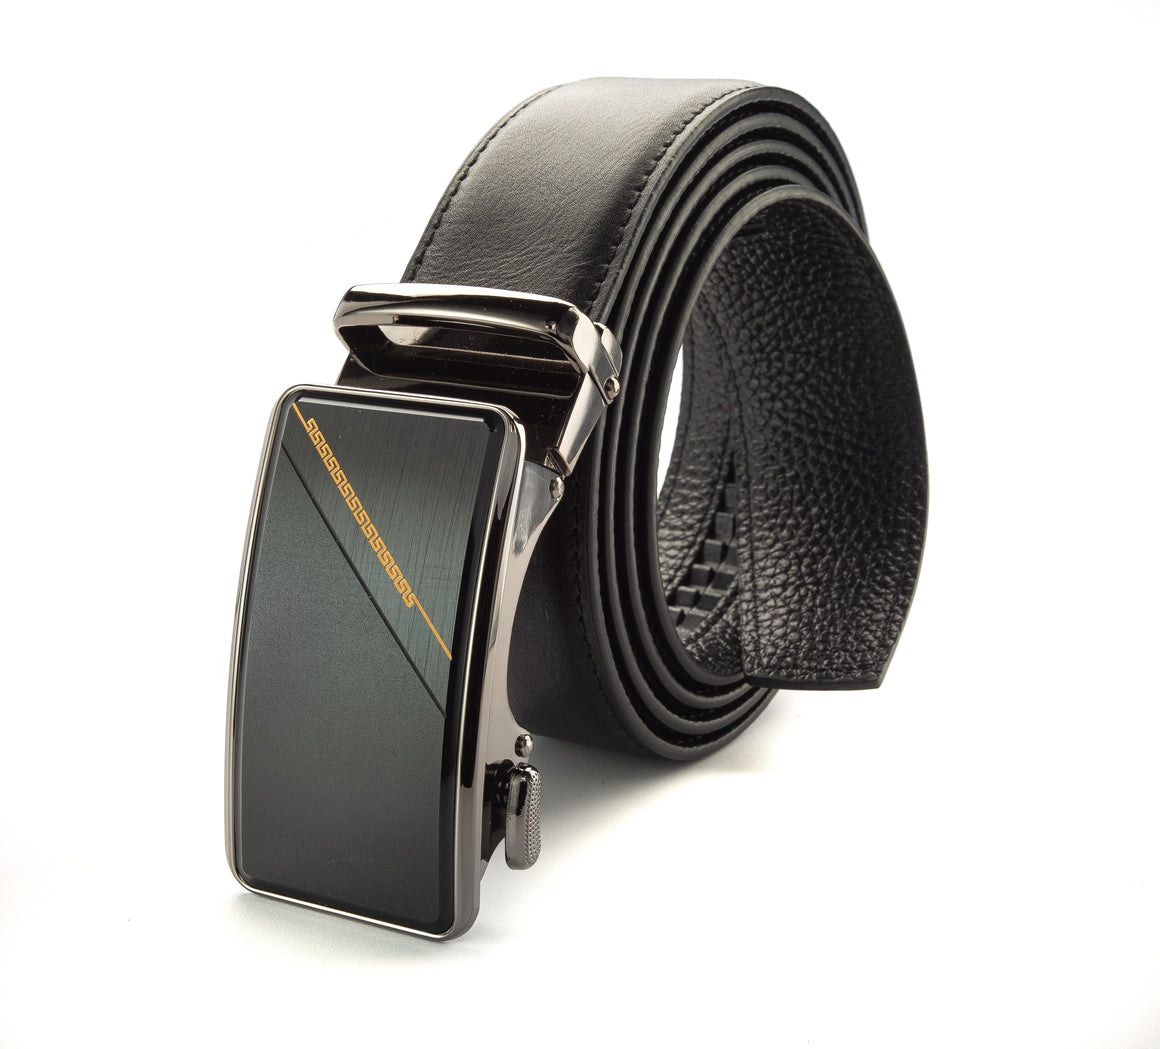 Discover Royal: Men's leather track belts for distinguished formal and casual wear | BELT-61